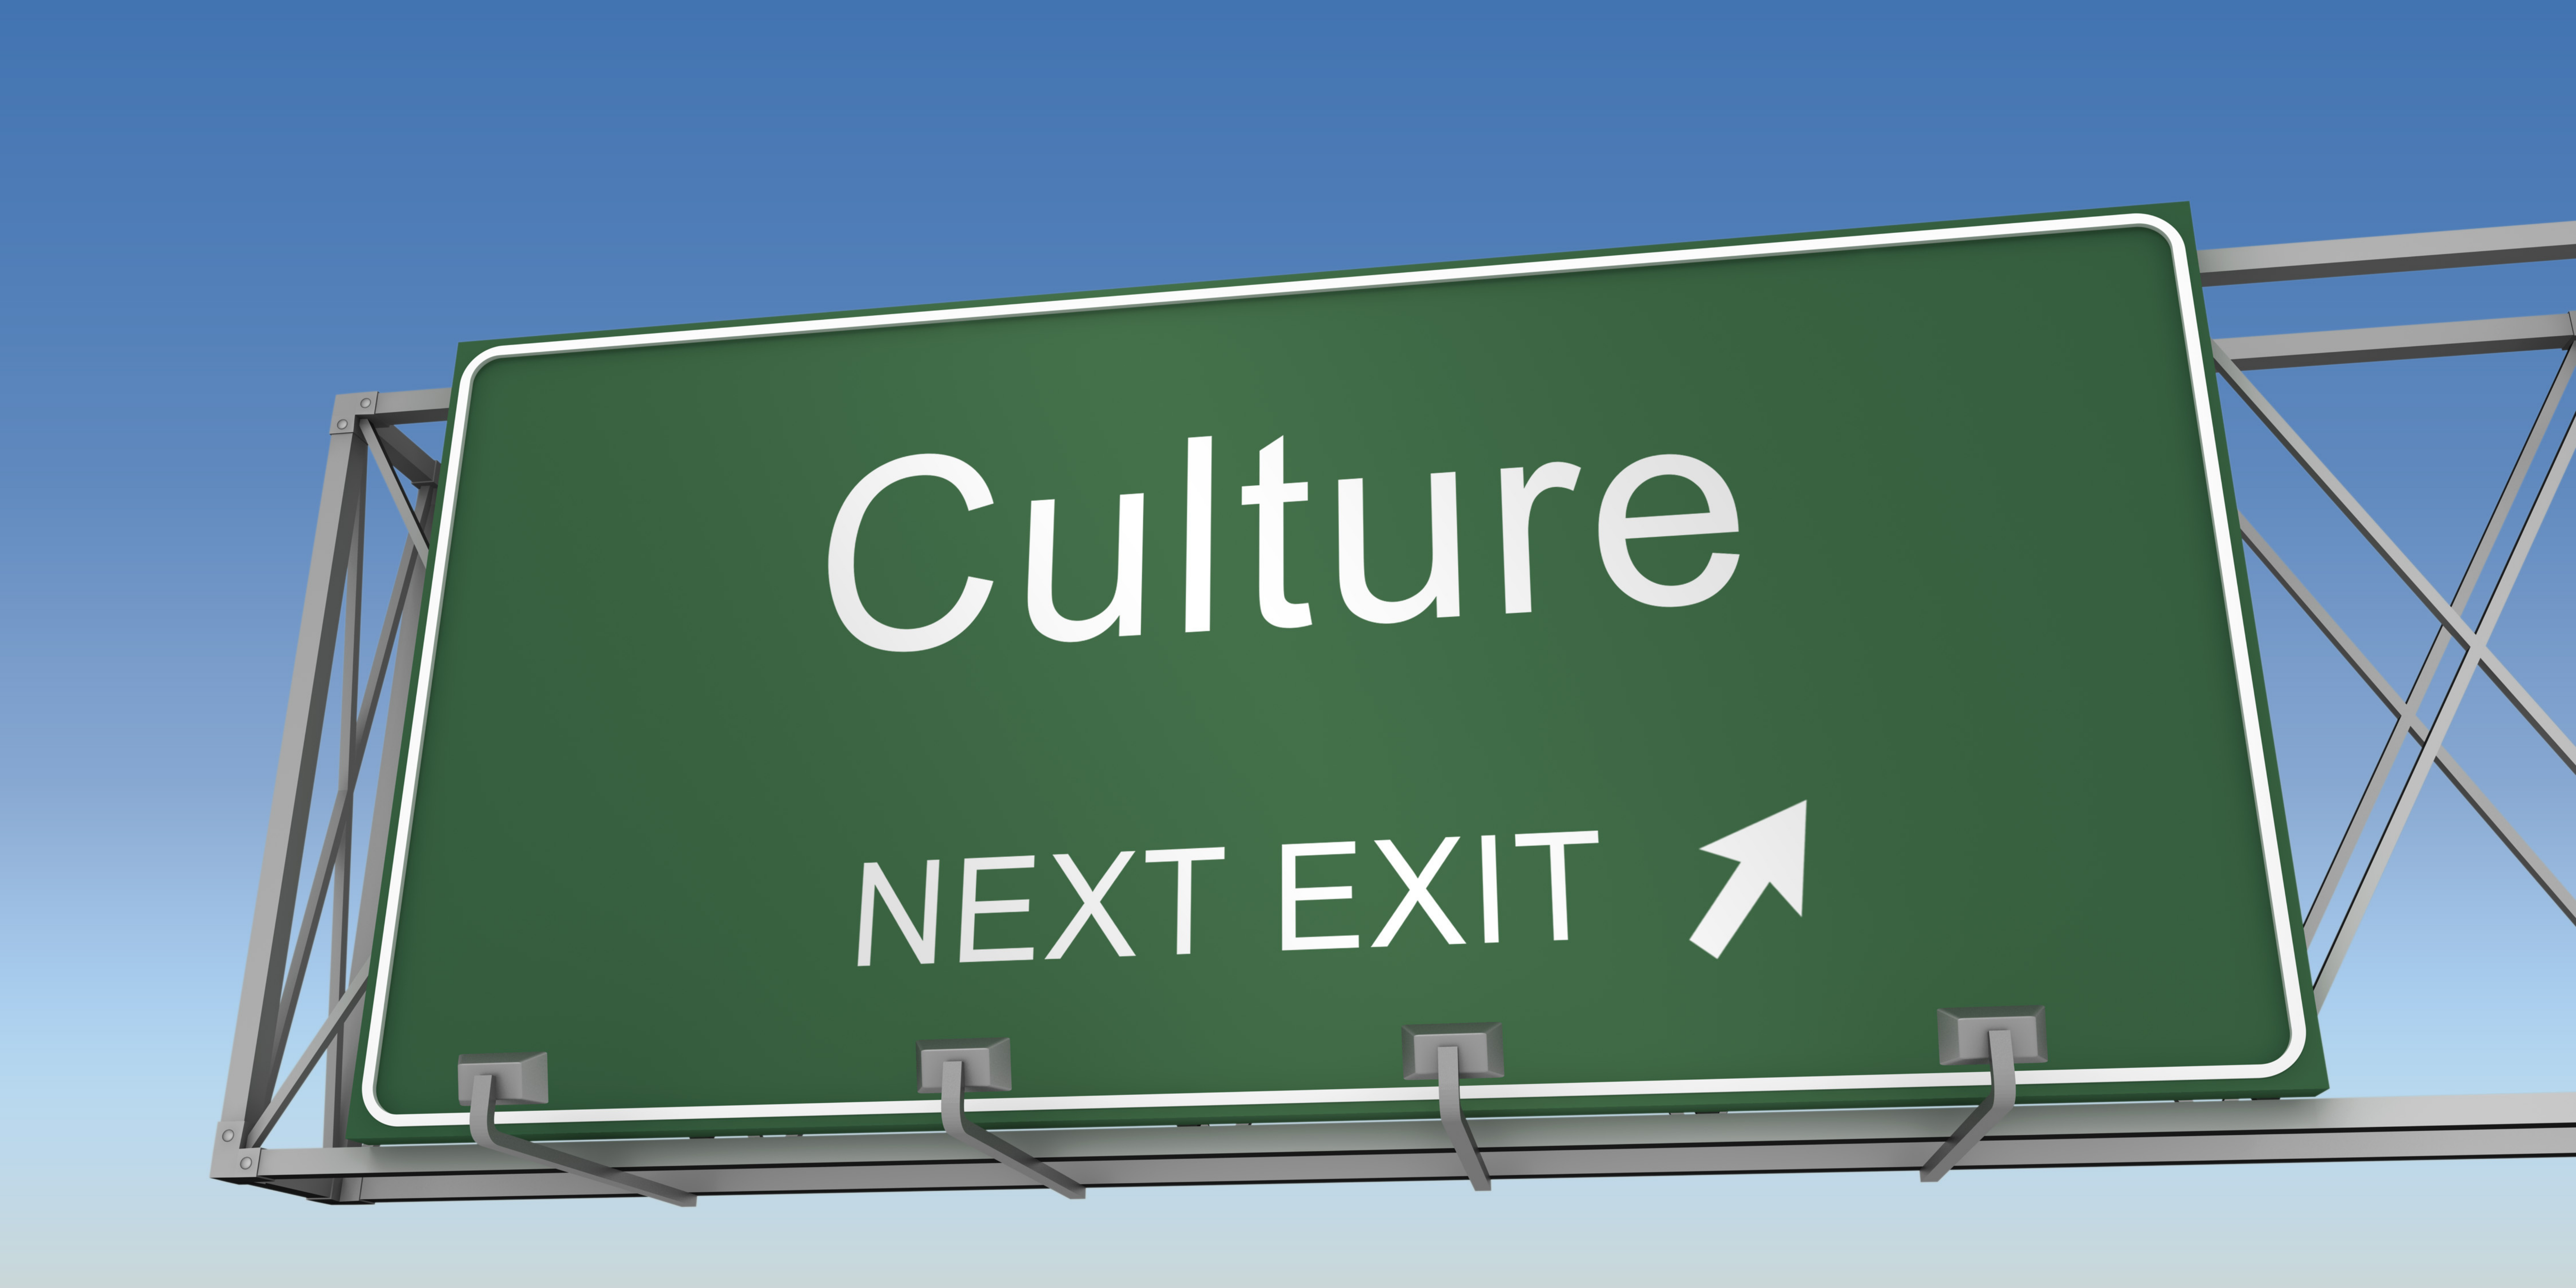 Culture next exit illustration